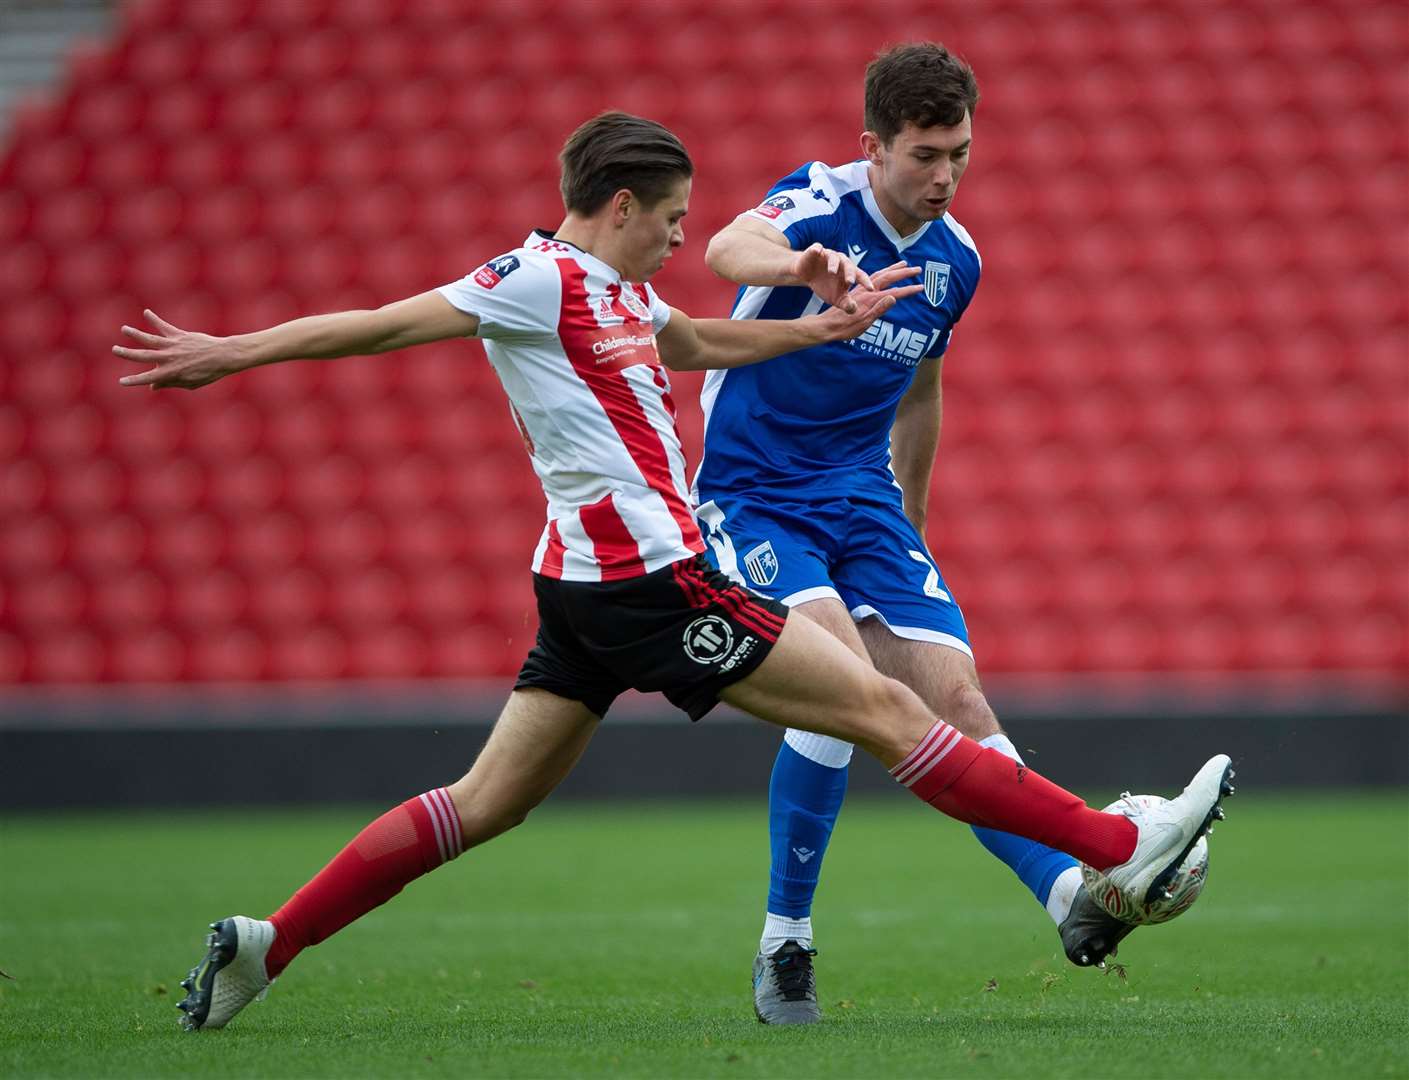 Tom O'Connor in action for Gillingham against Sunderland